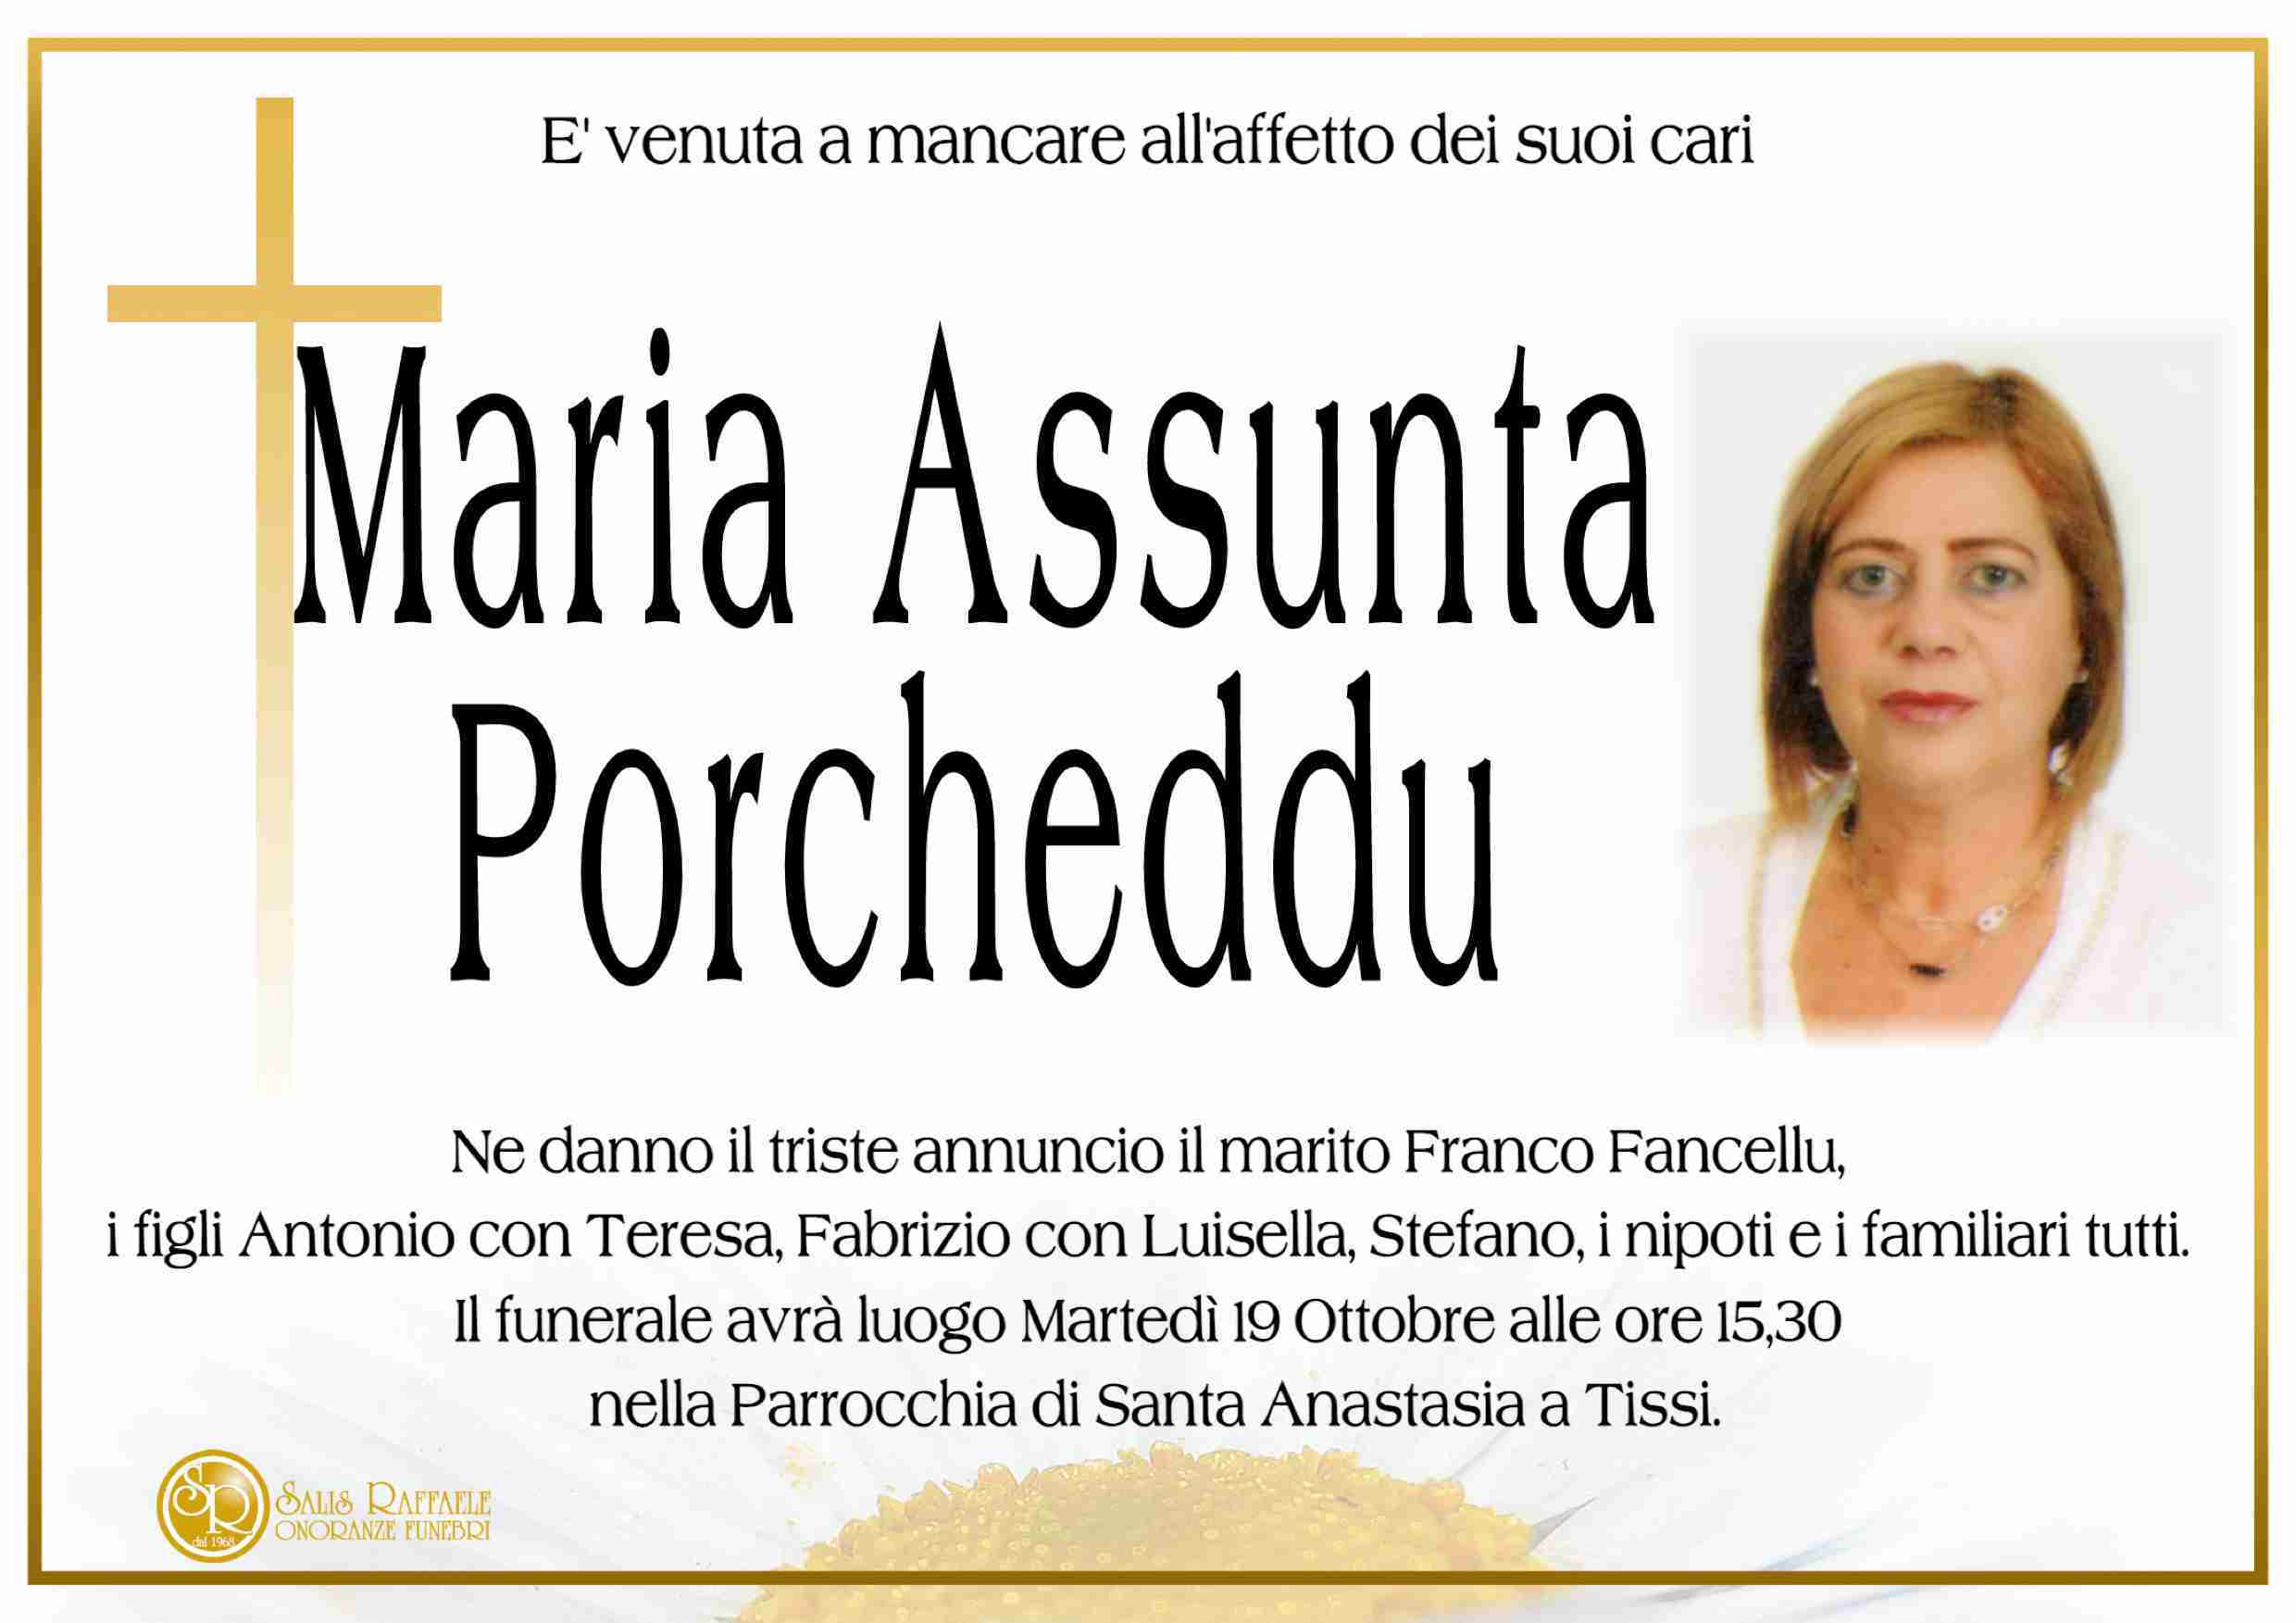 Maria Assunta Porcheddu